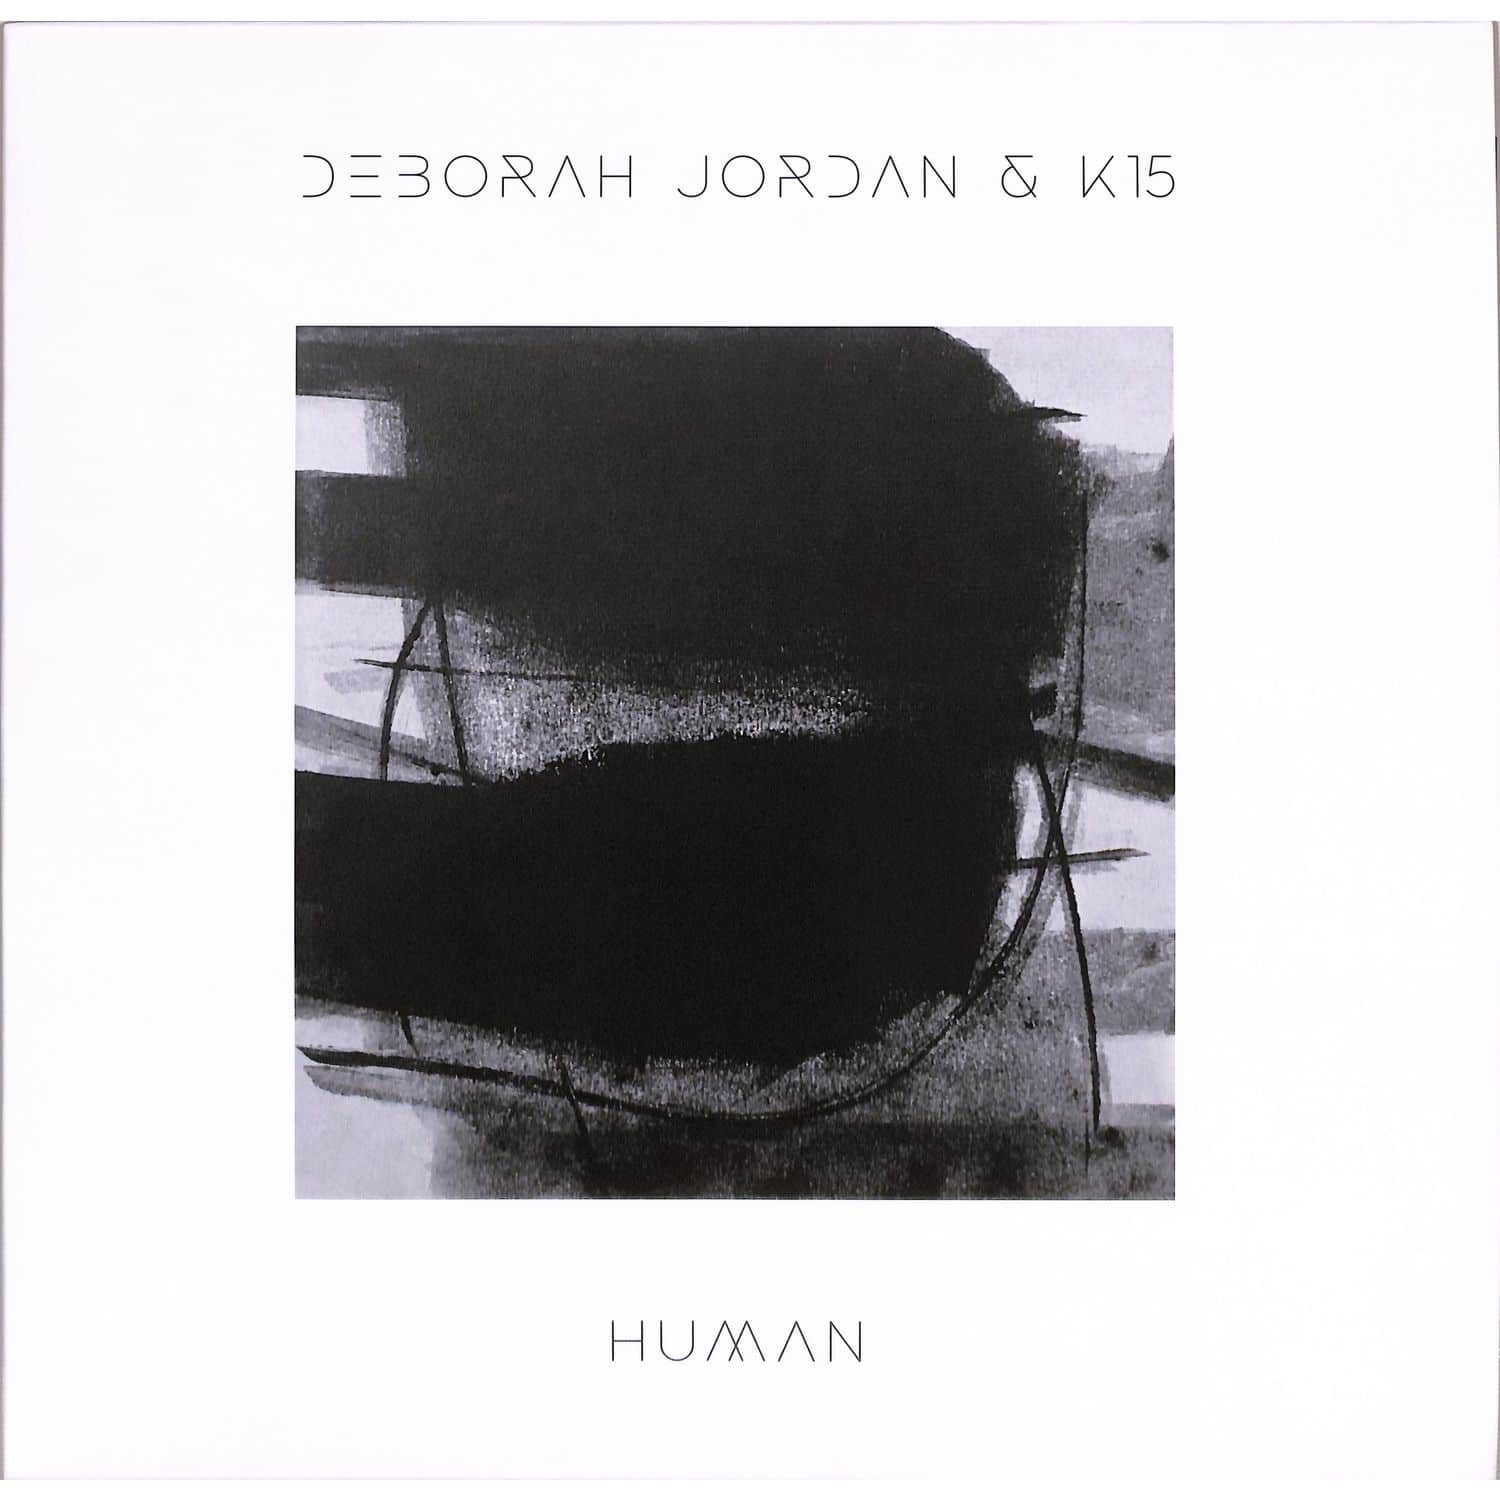 Deborah Jordan & K15 - HUMAN 